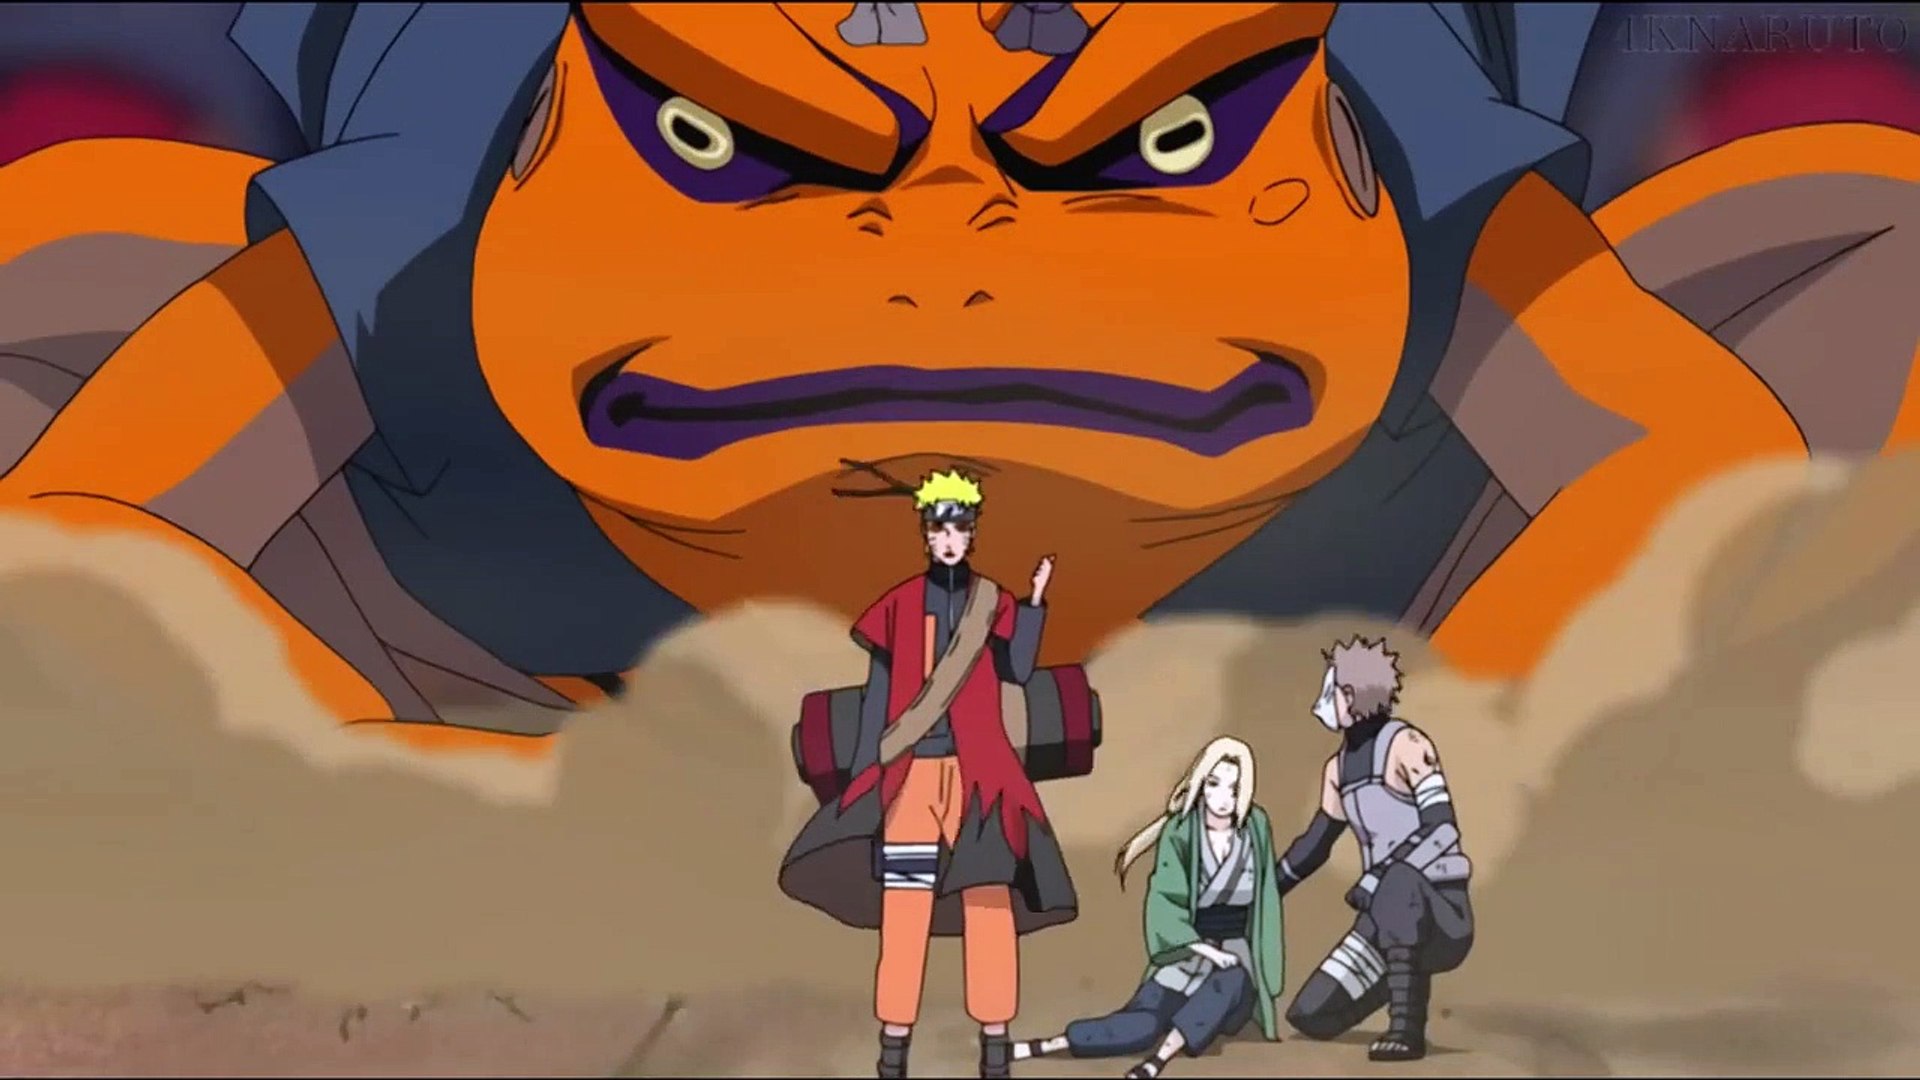 Naruto Shippuden - Naruto vs Pain, Iconic fight and arc 😮‍💨, By Naruto